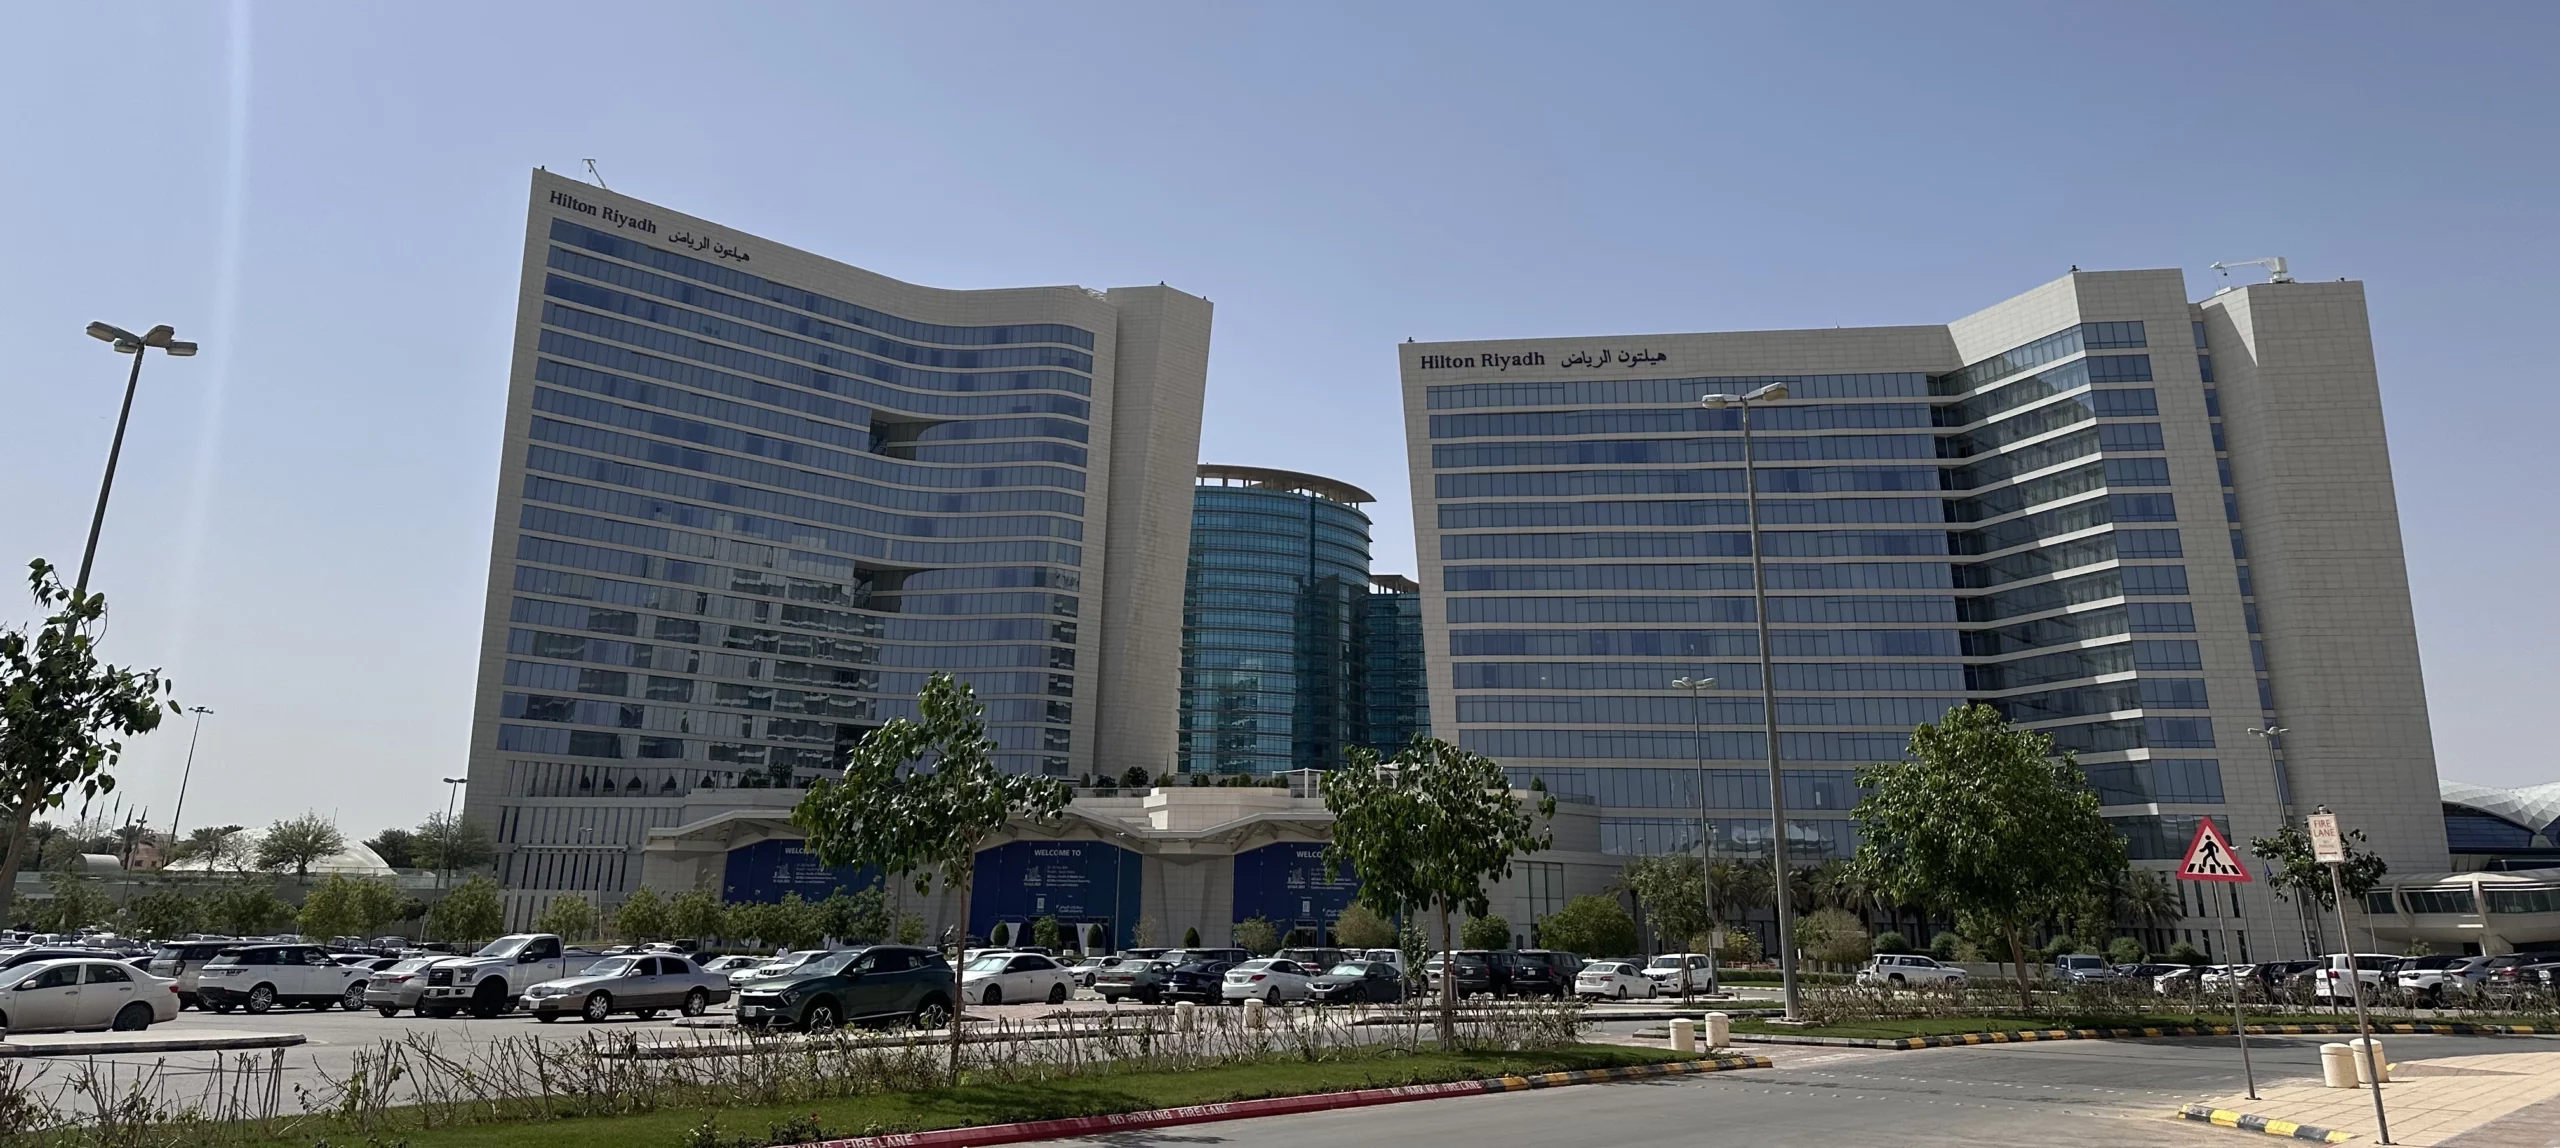 Photograph of the HIlton Riyadh hotel